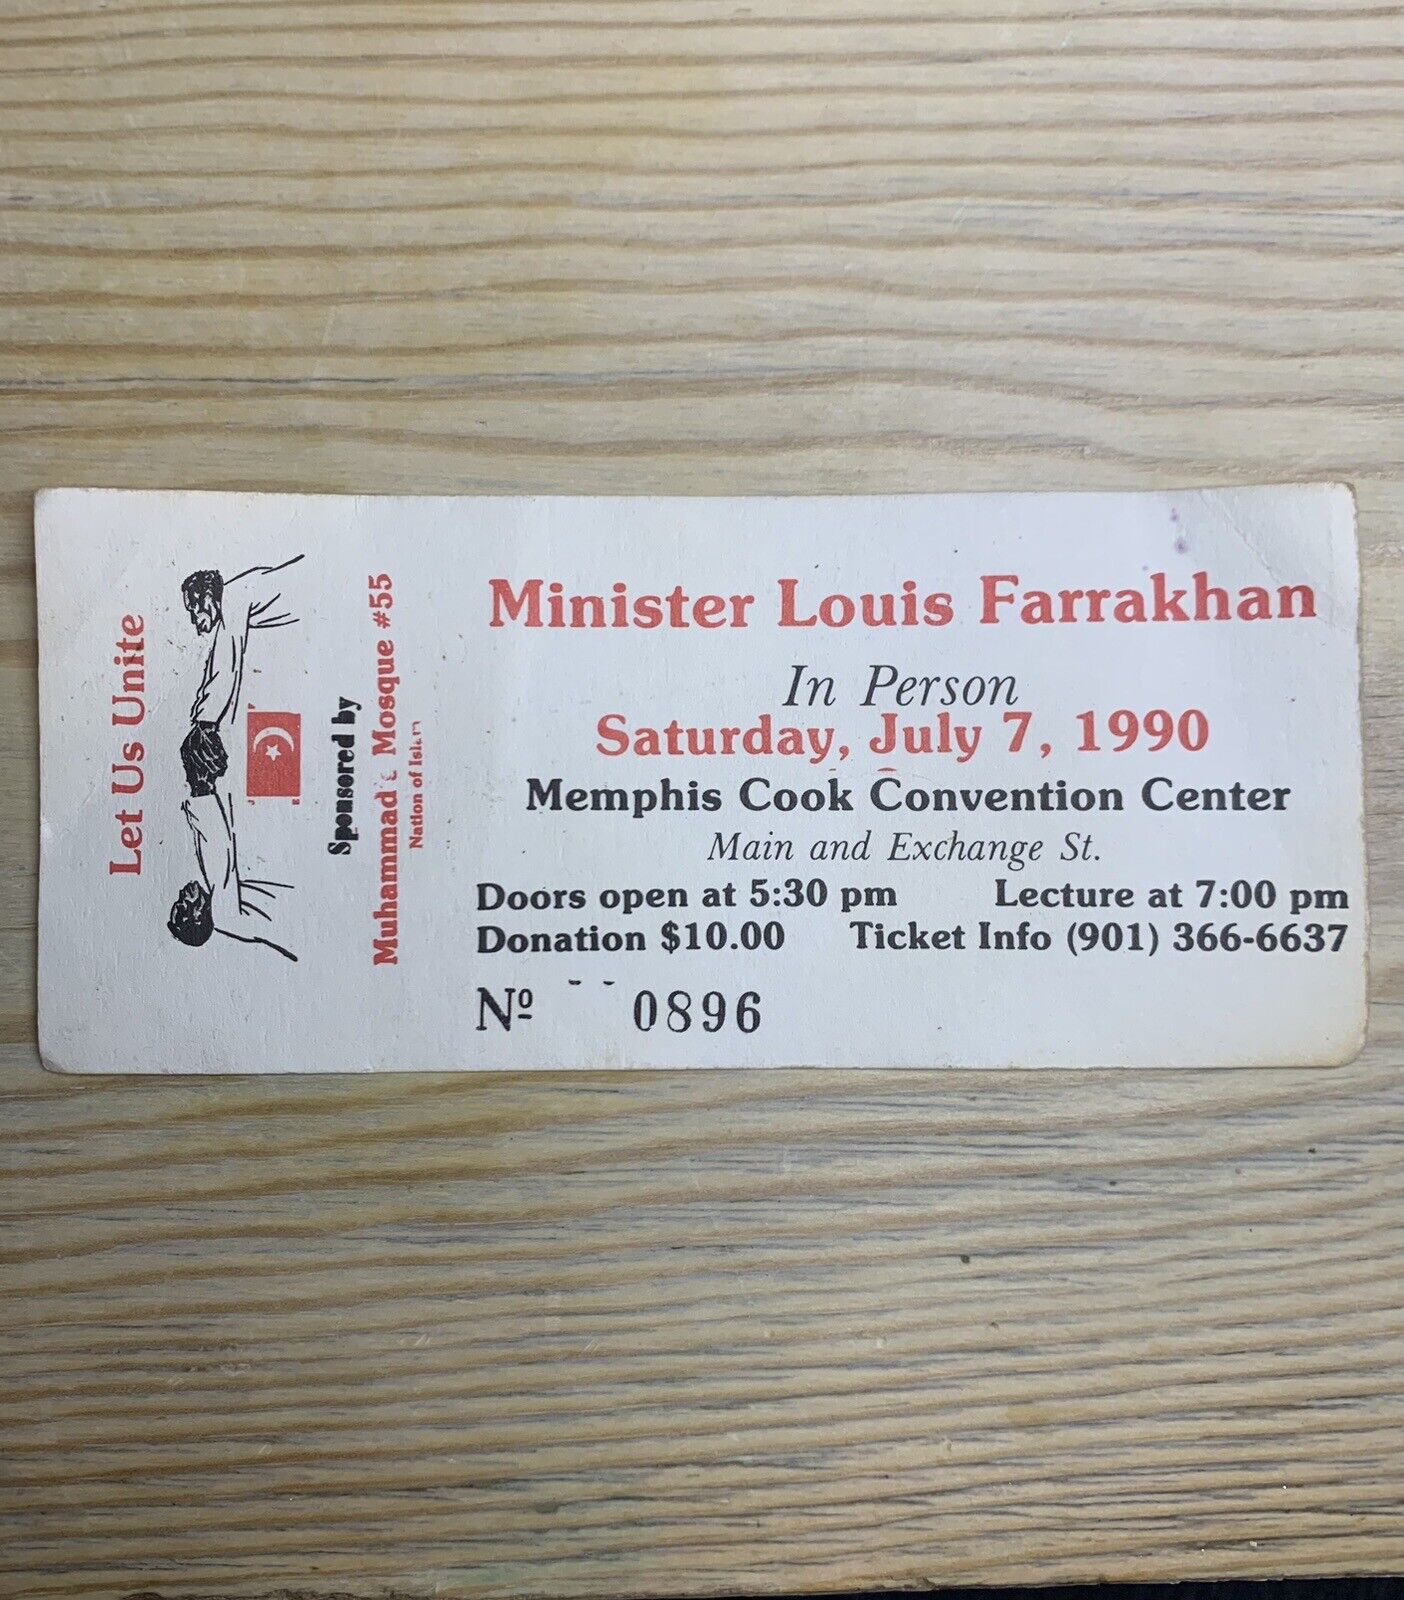 Minister Louis Farrakhan July 7, 1990 Memphis Cook Convention Center Ticket Stub